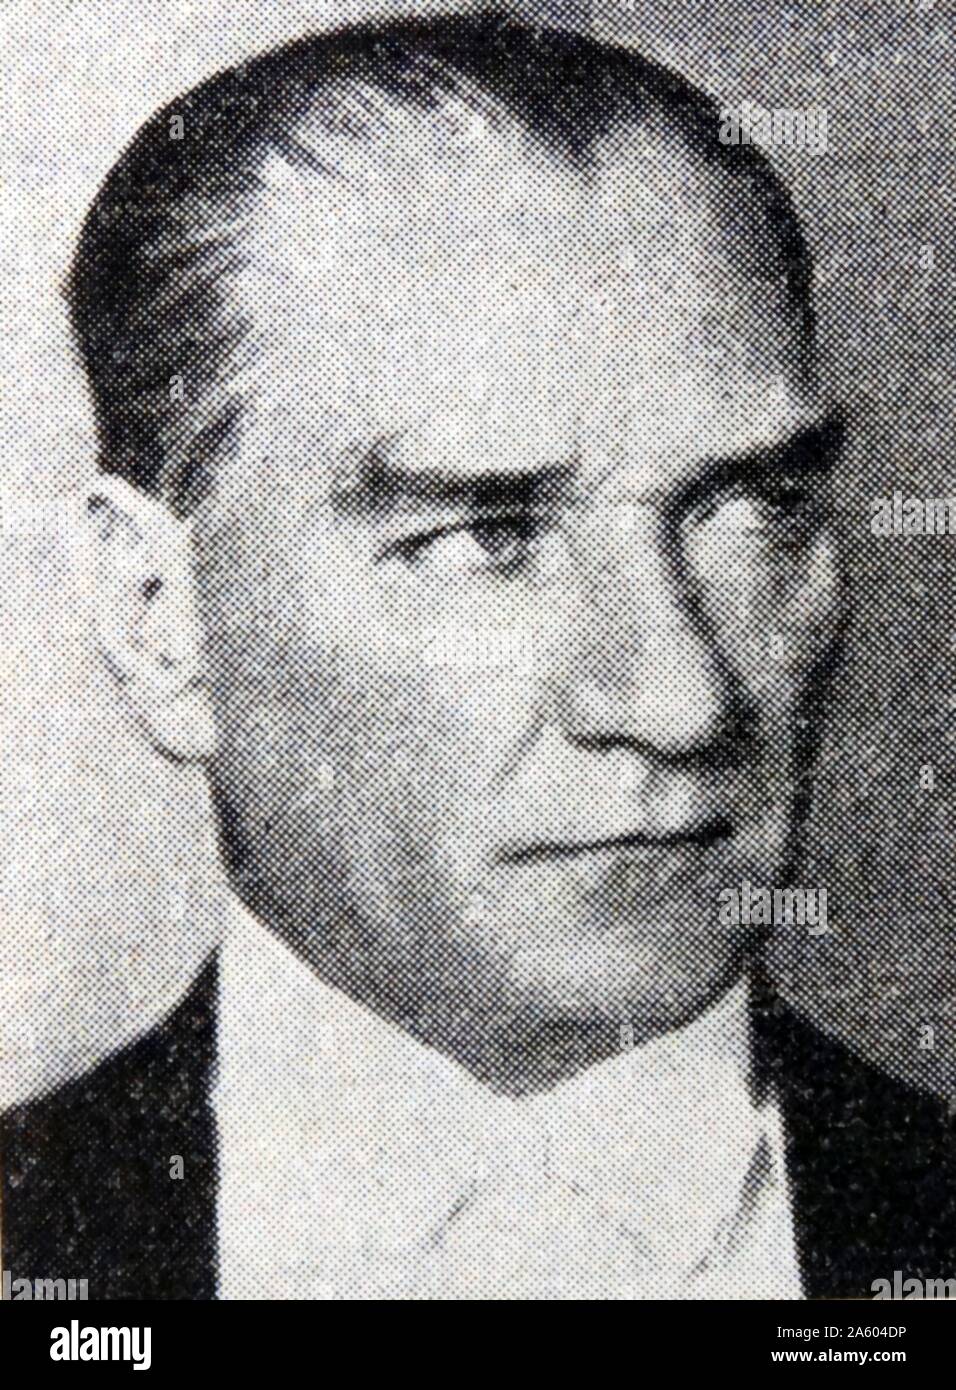 Photographic portrait of Mustafa Kemal Atatürk (1881-1938) a Turkish army officer, revolutionary, and President of Turkey. Dated 20th Century Stock Photo